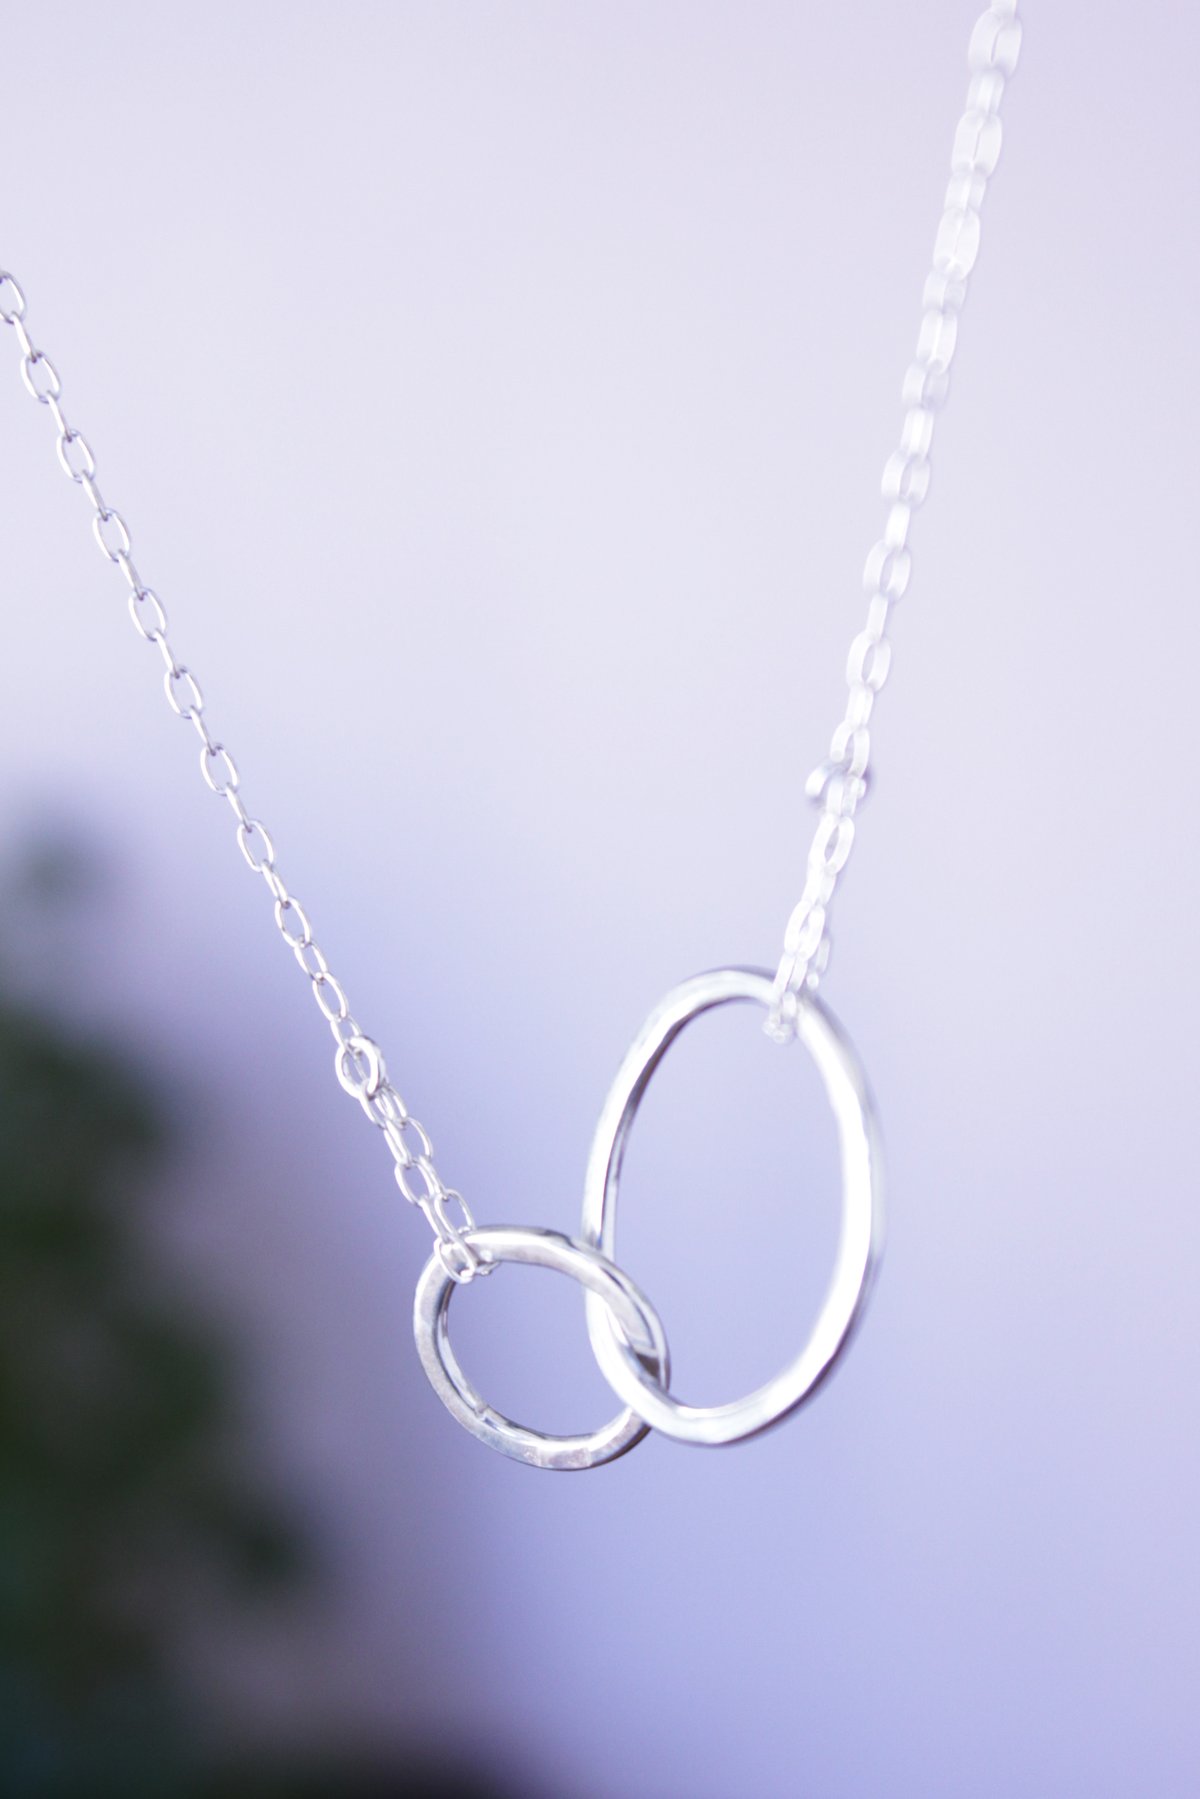 Image of Interlocking silver loops necklace